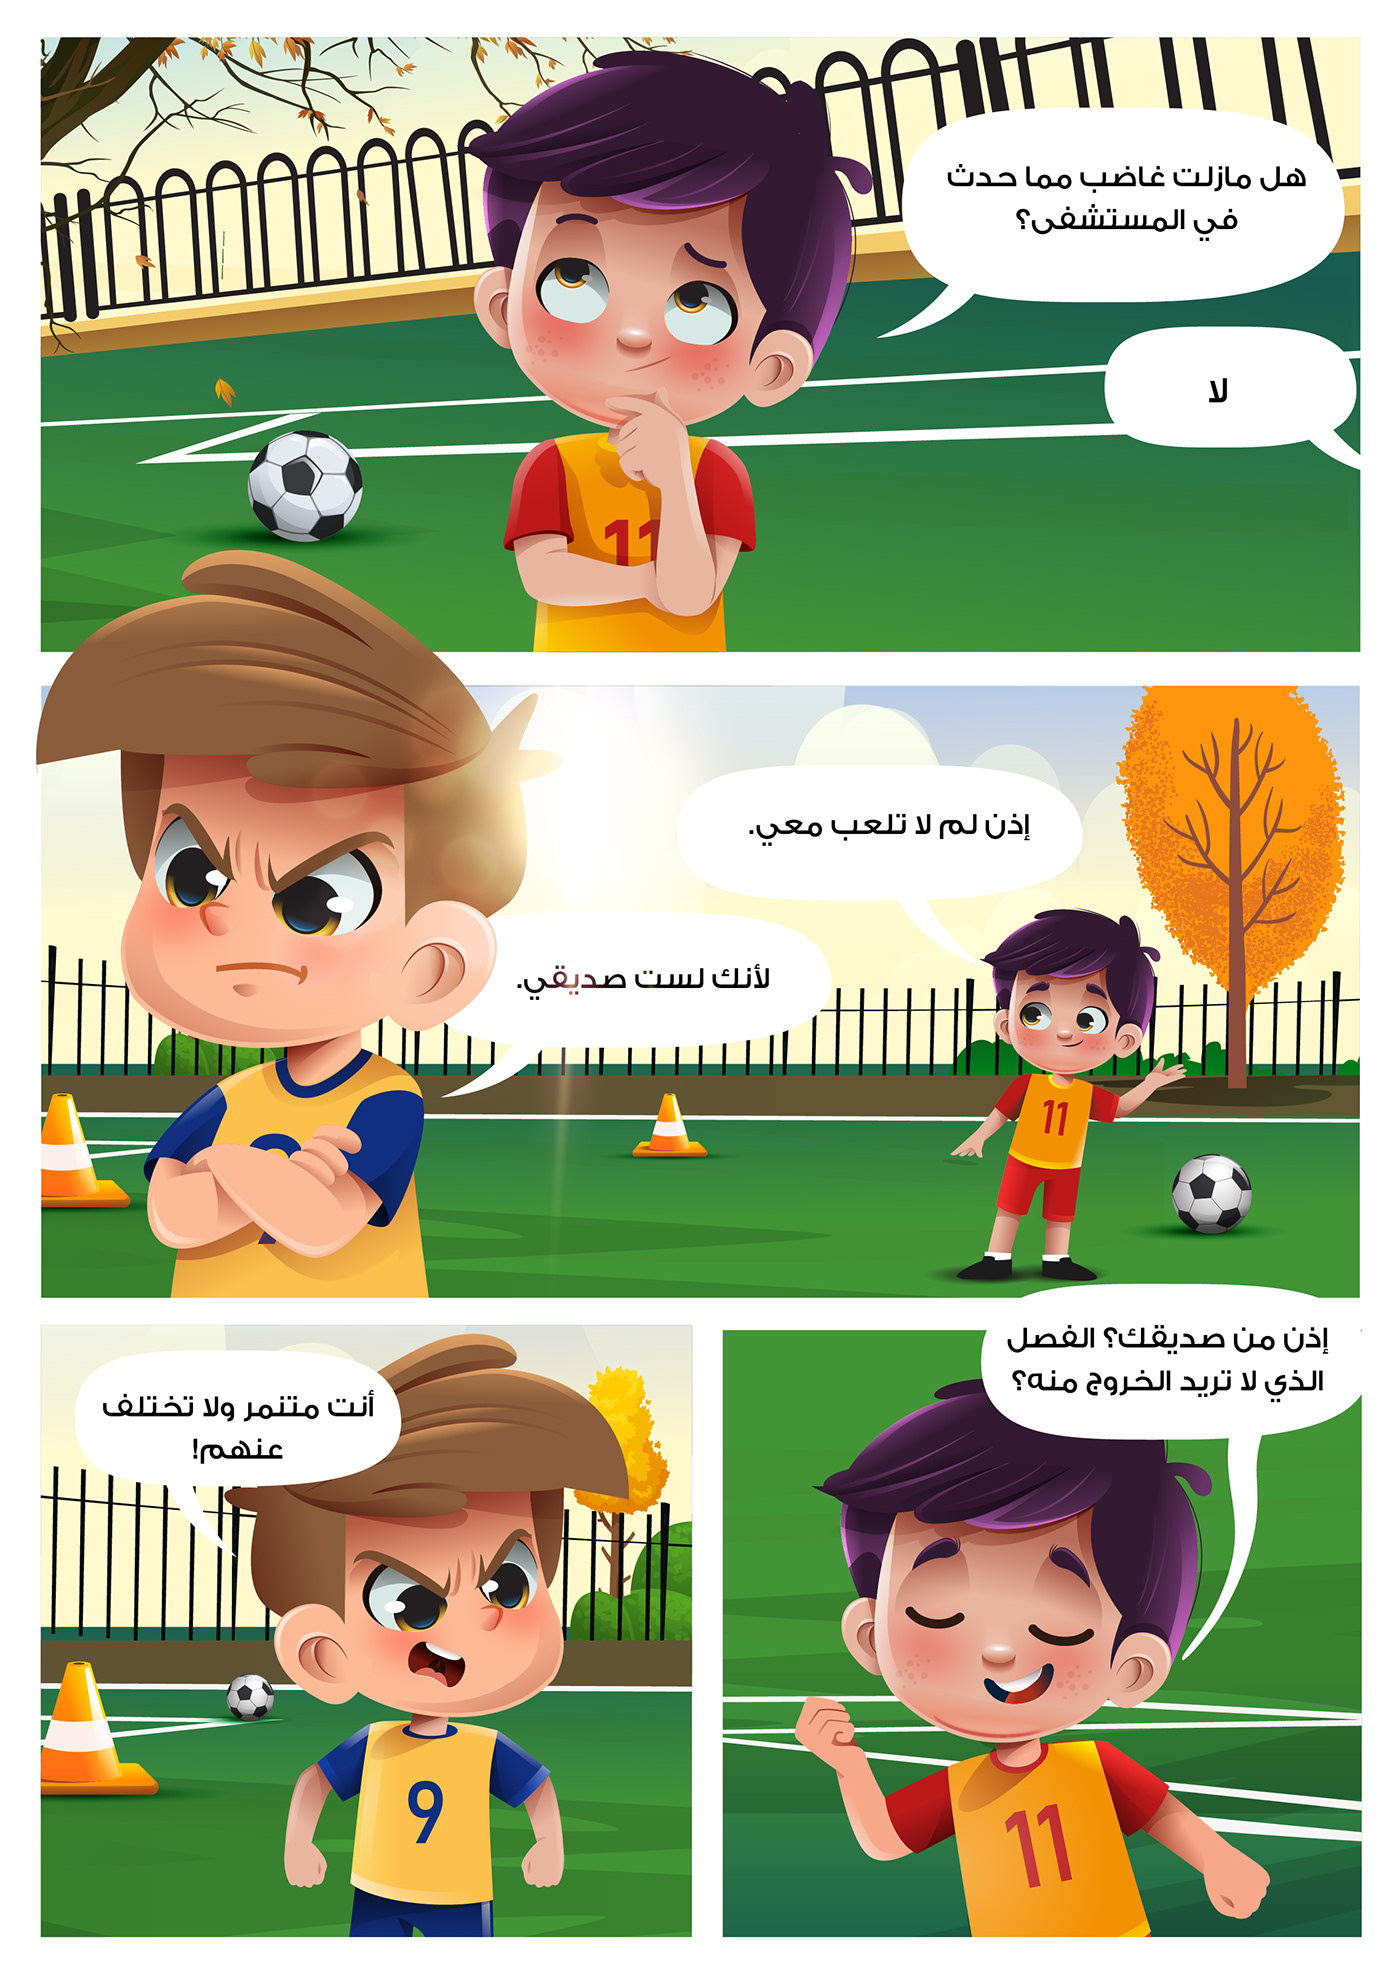 kids story Arab kids Muslim Kids islamic art serag basel comics book kids football player Saudi character